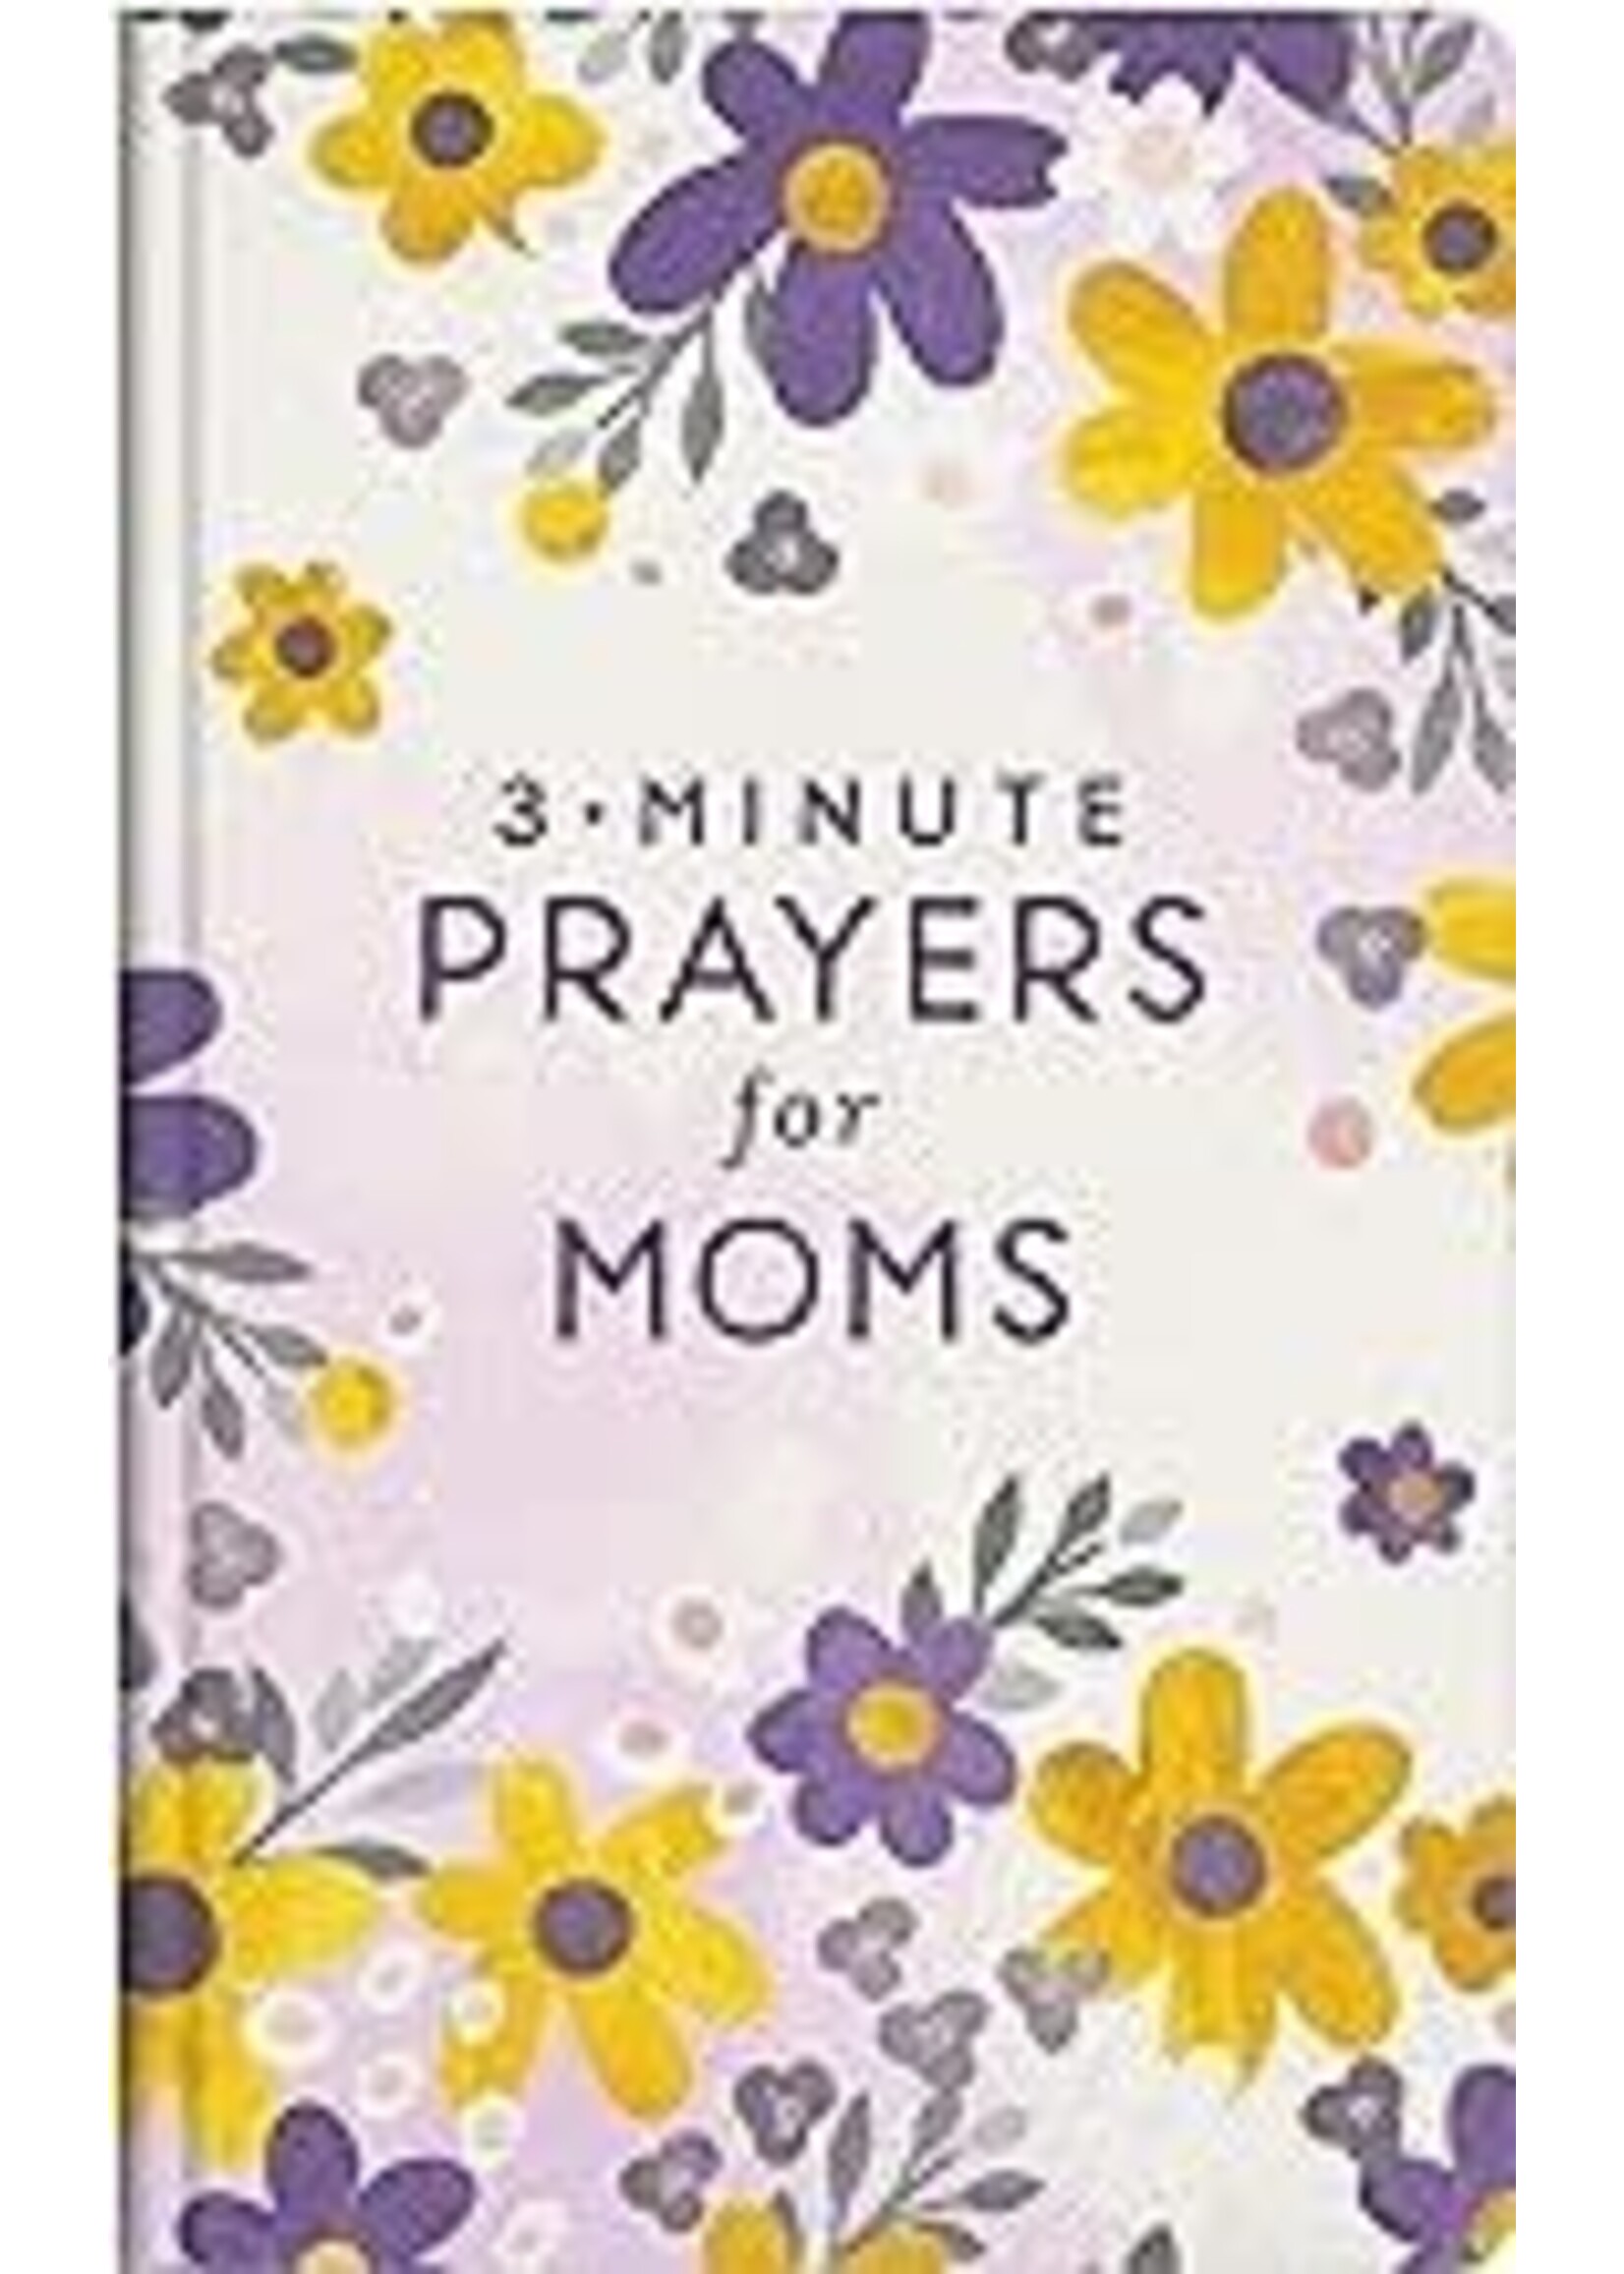 3-Minute Prayers For Moms